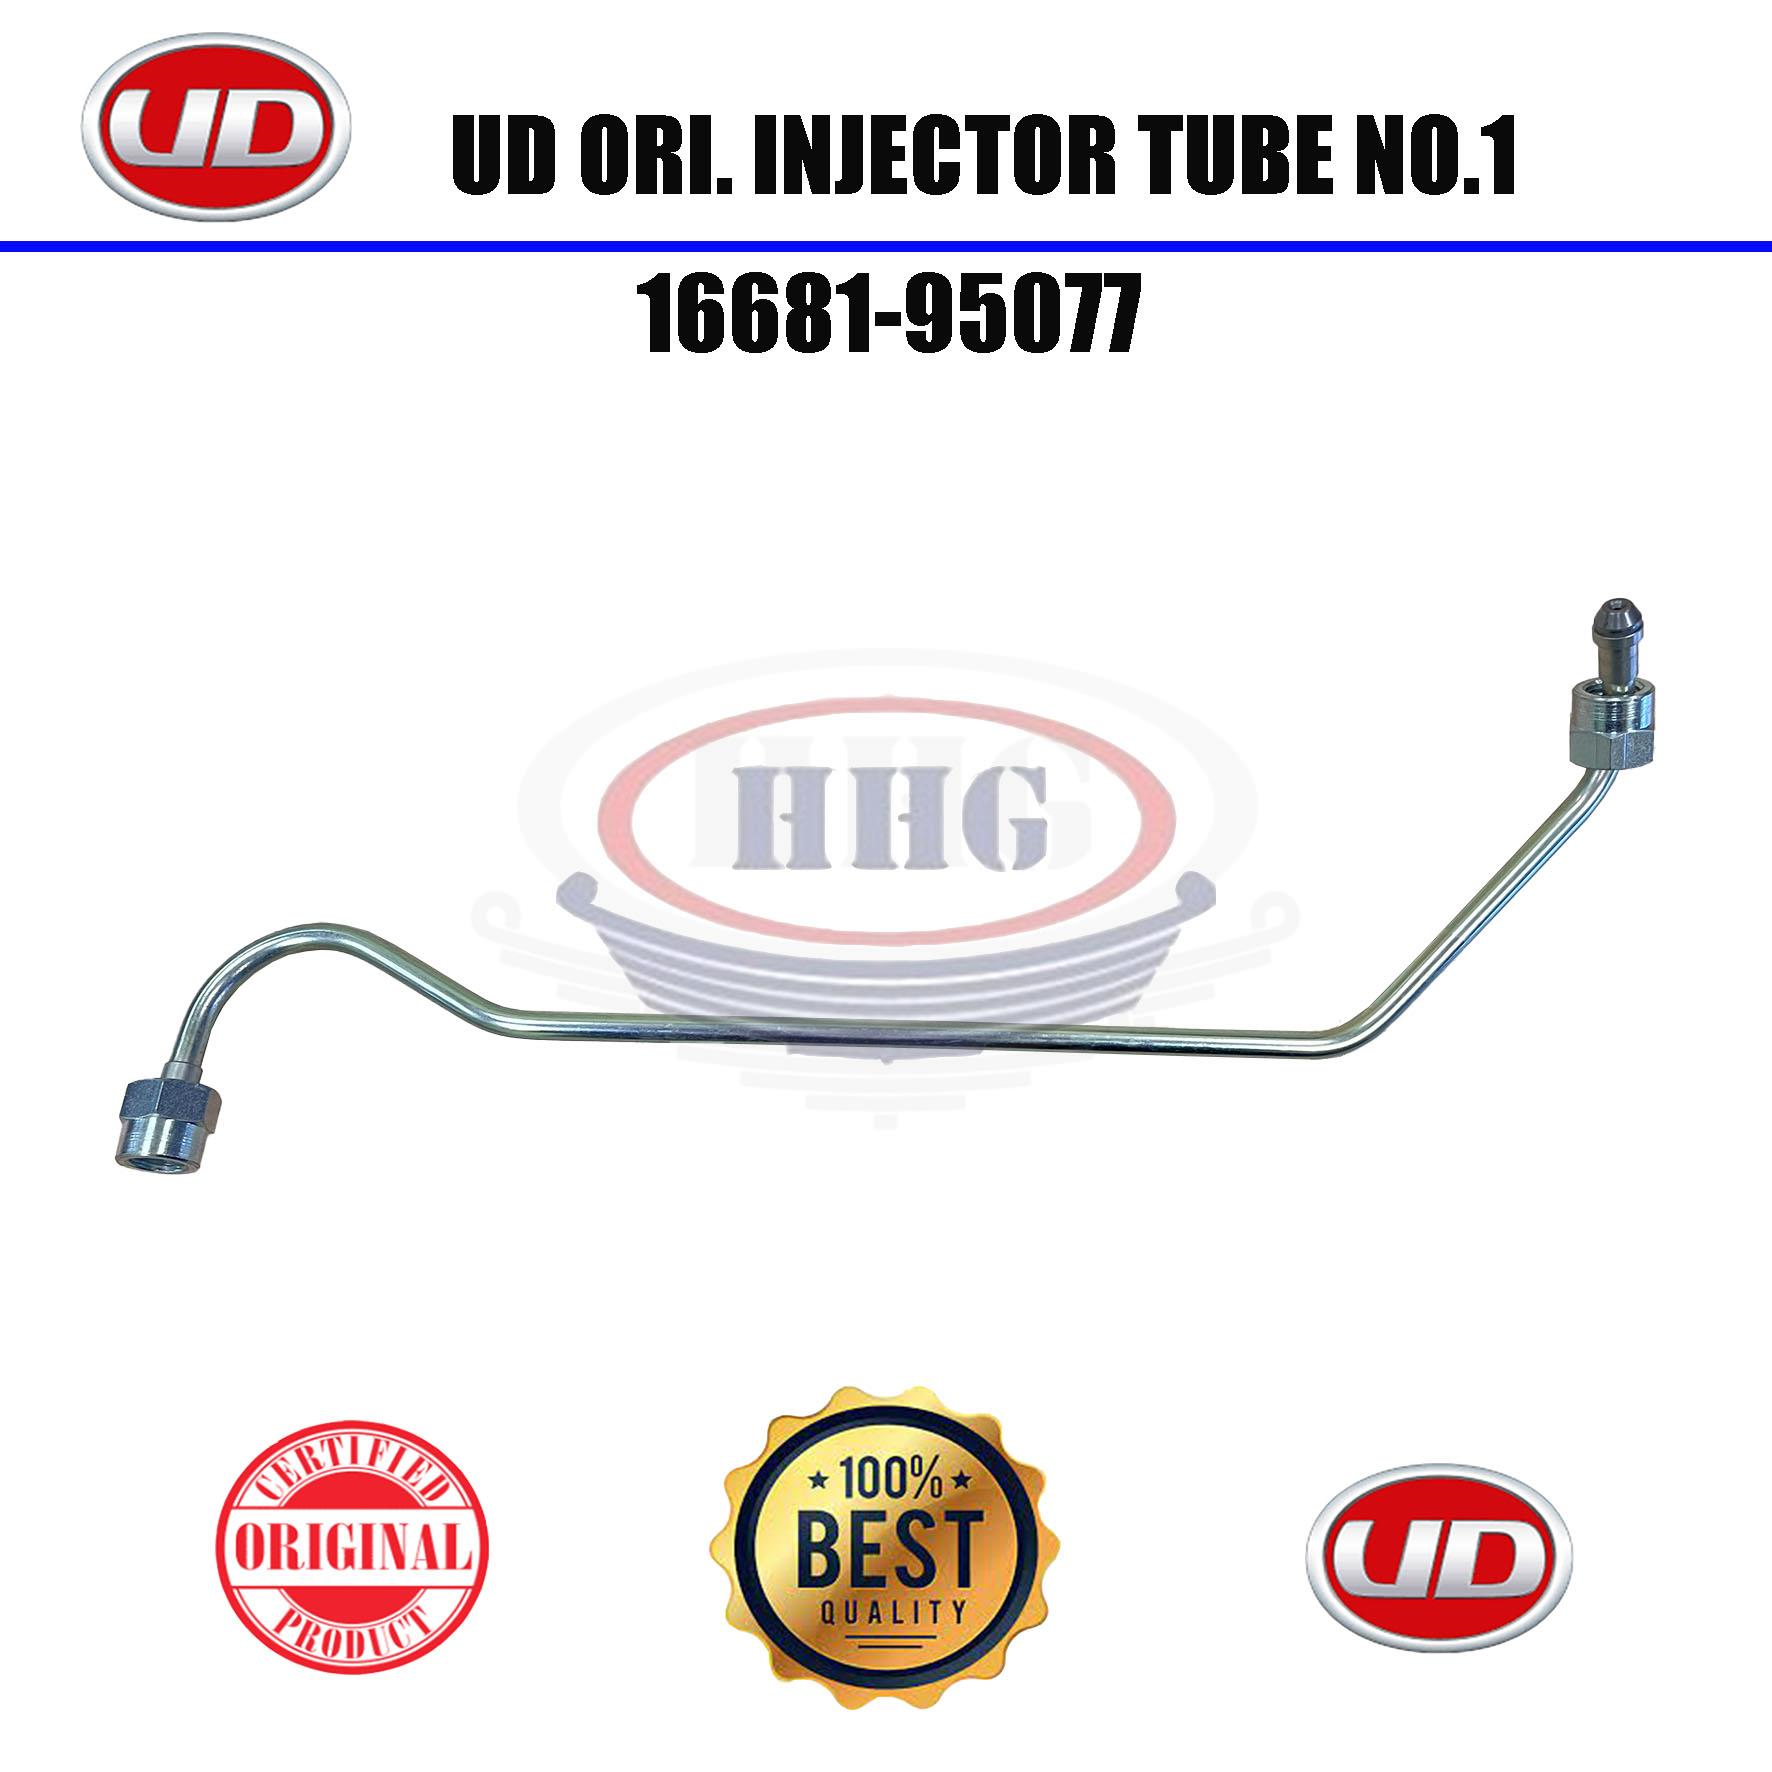 UD Original NE6T Injector Tube No.1 (16681-95077)